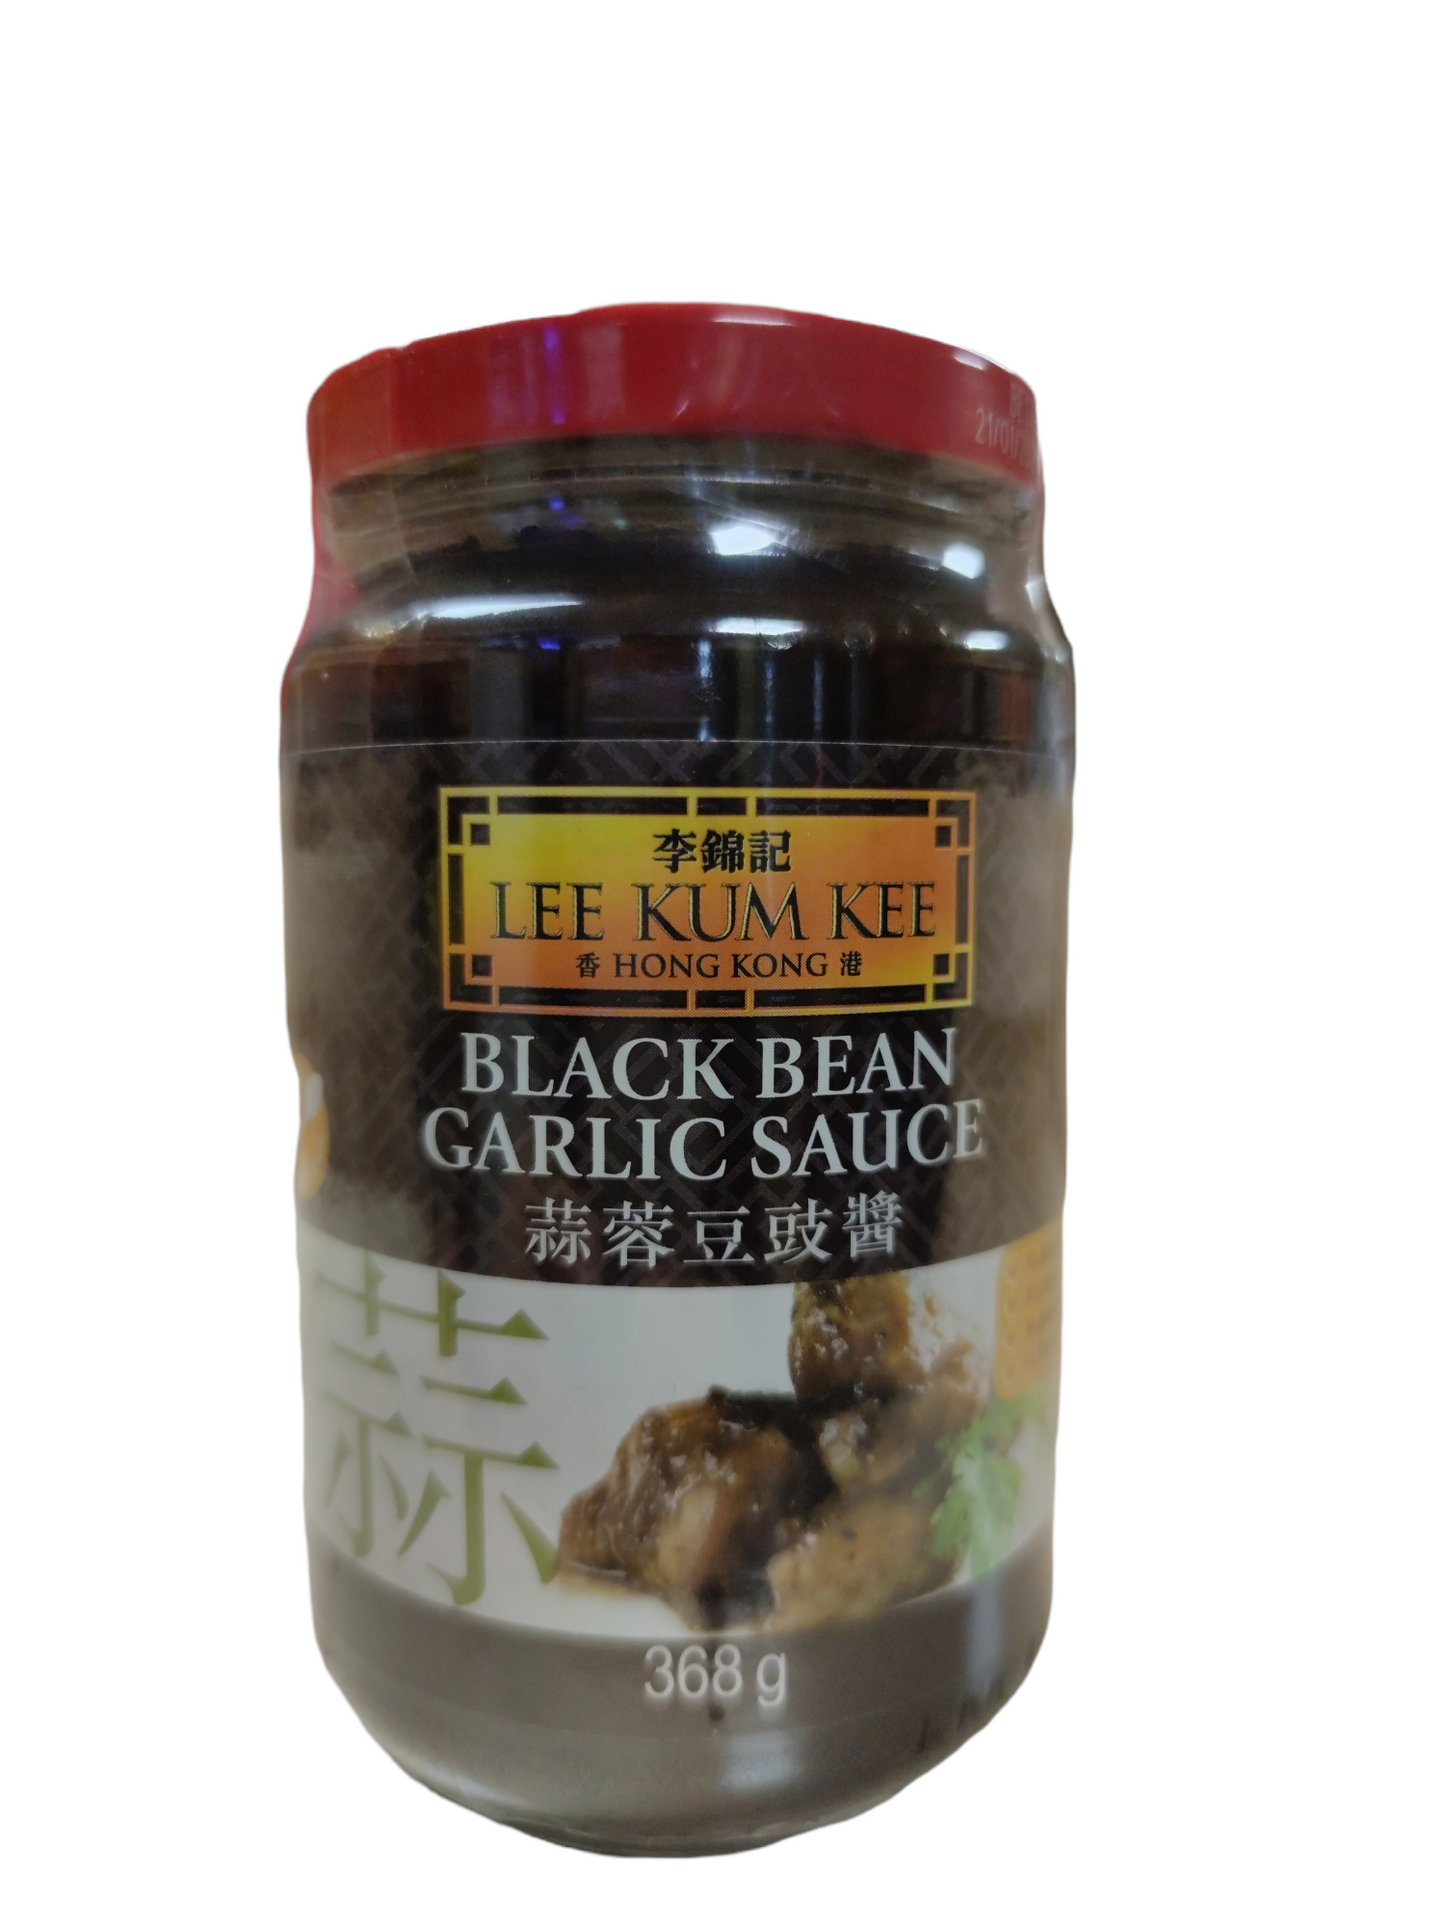 LKK Black Bean Garlic Sauce 368g 李錦記蒜蓉豆豉醬